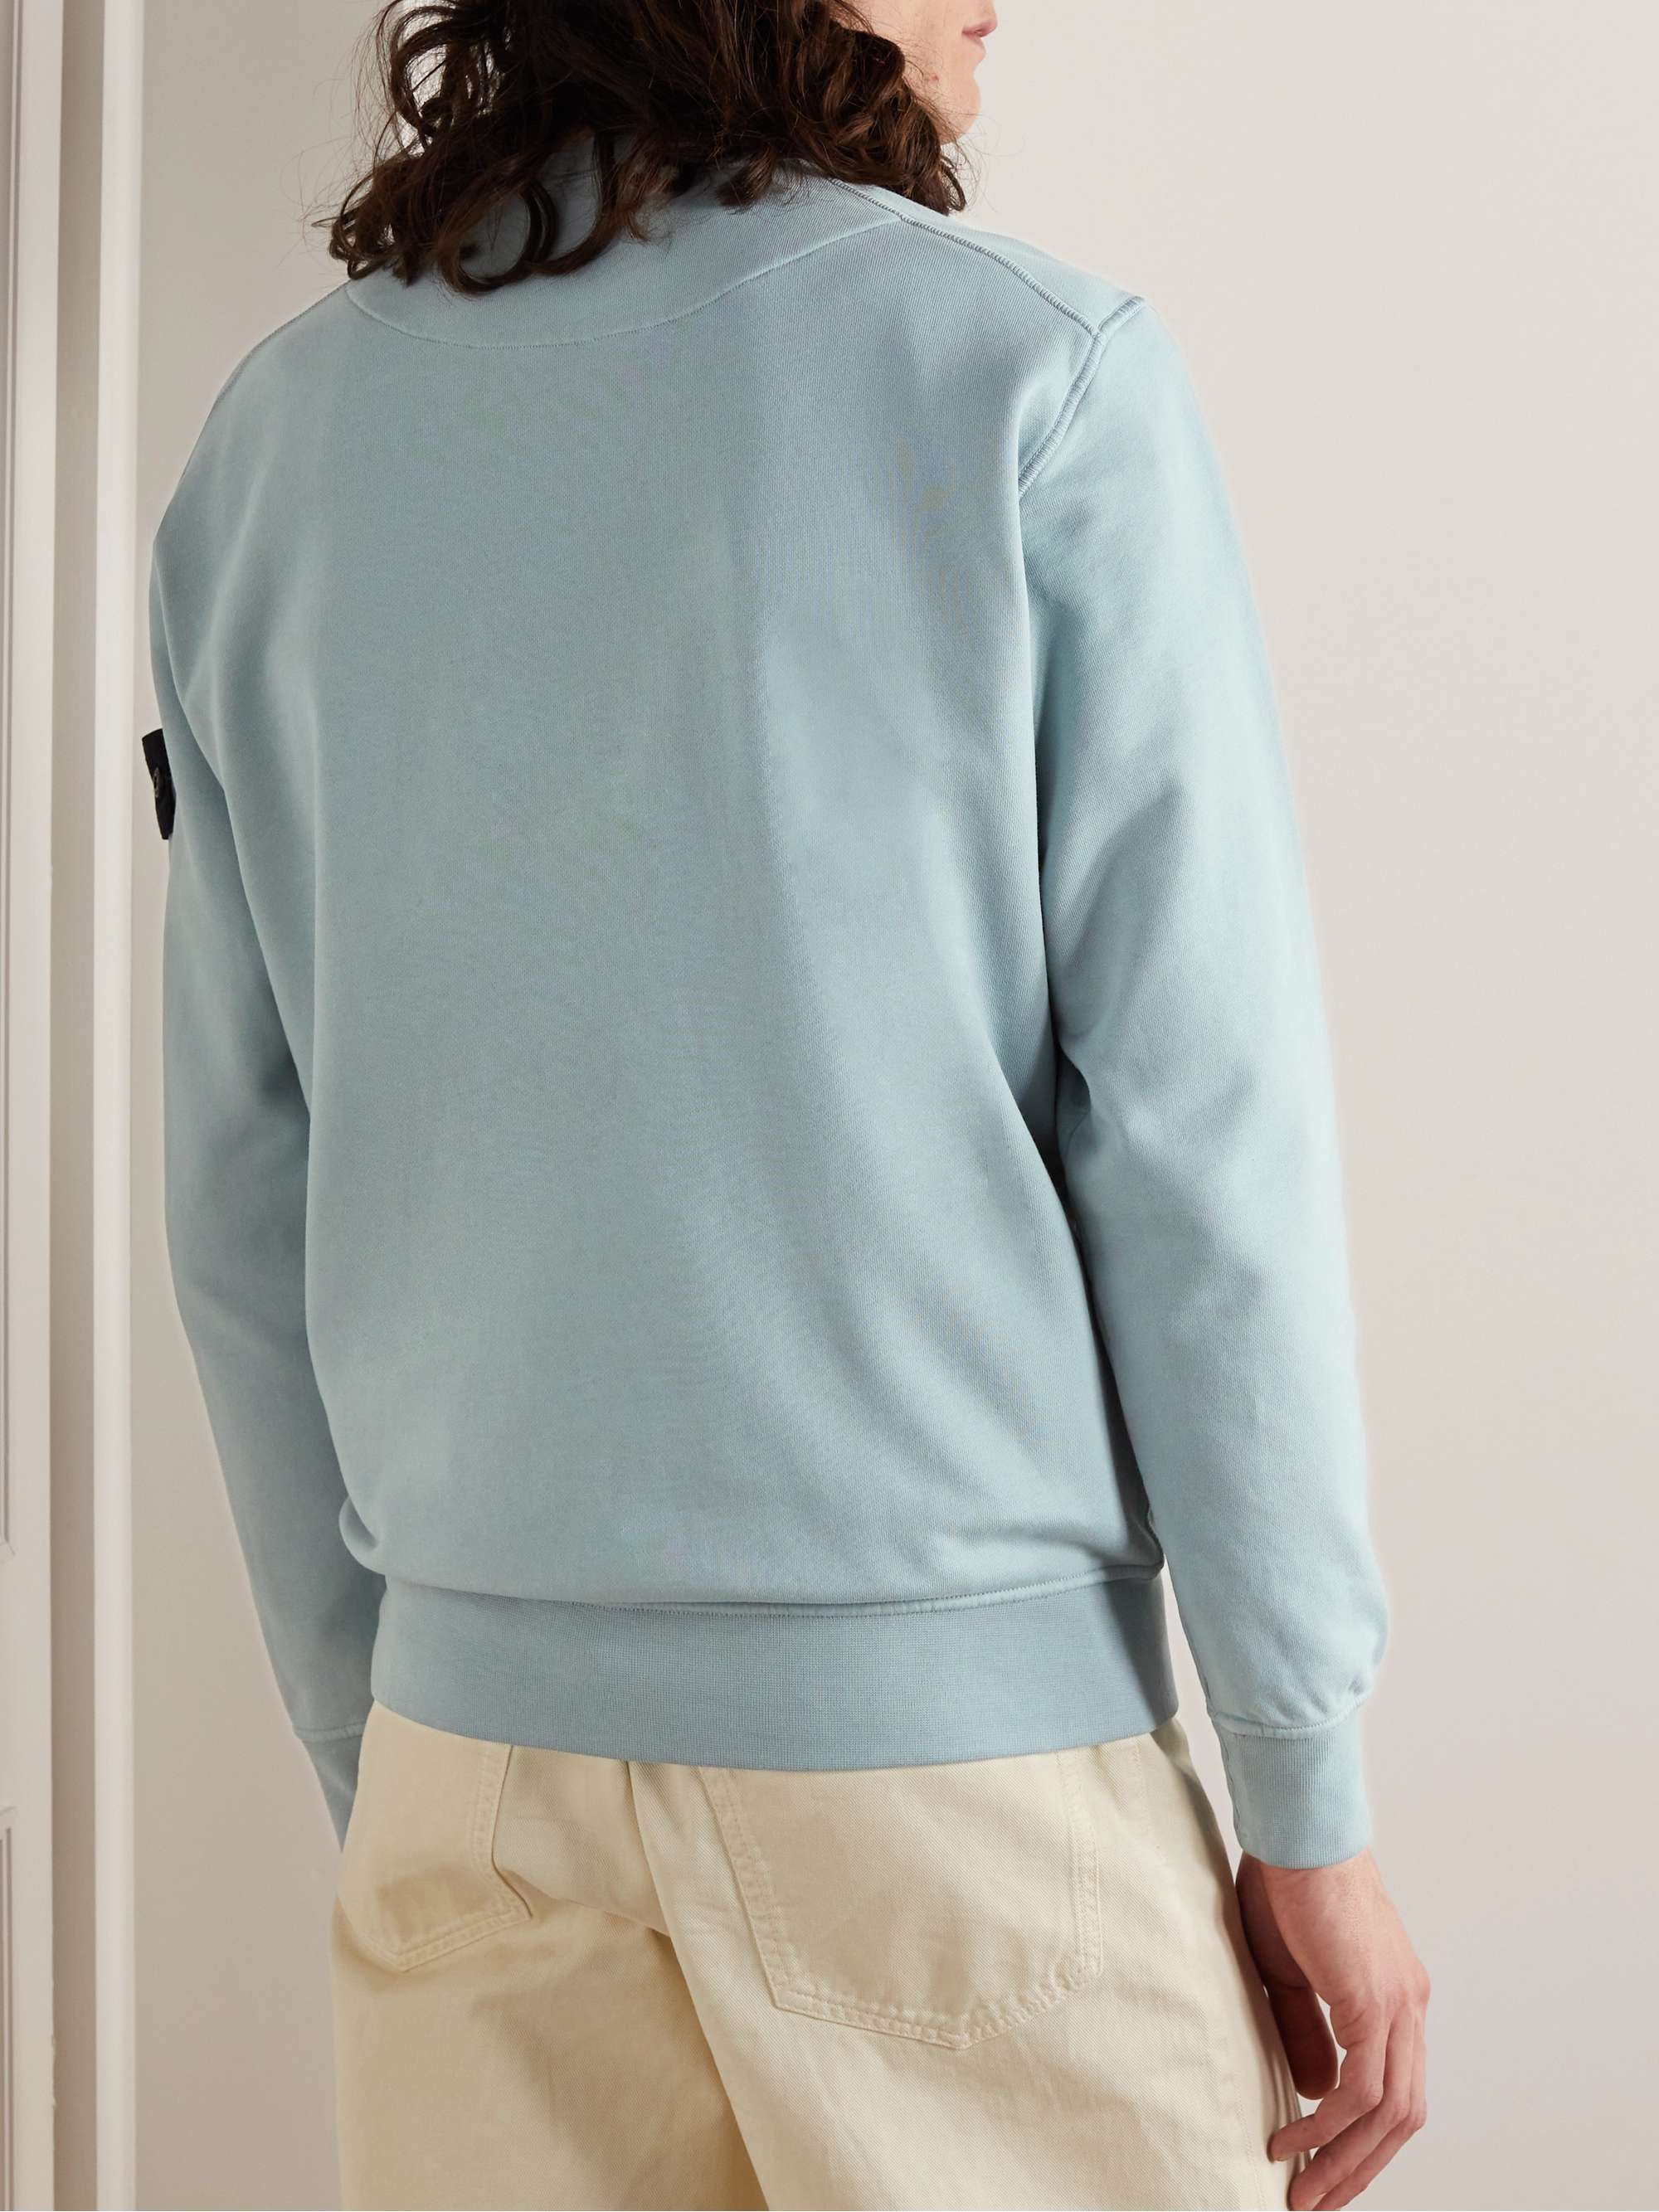 STONE ISLAND Logo-Appliquéd Garment-Dyed Cotton-Jersey Sweatshirt